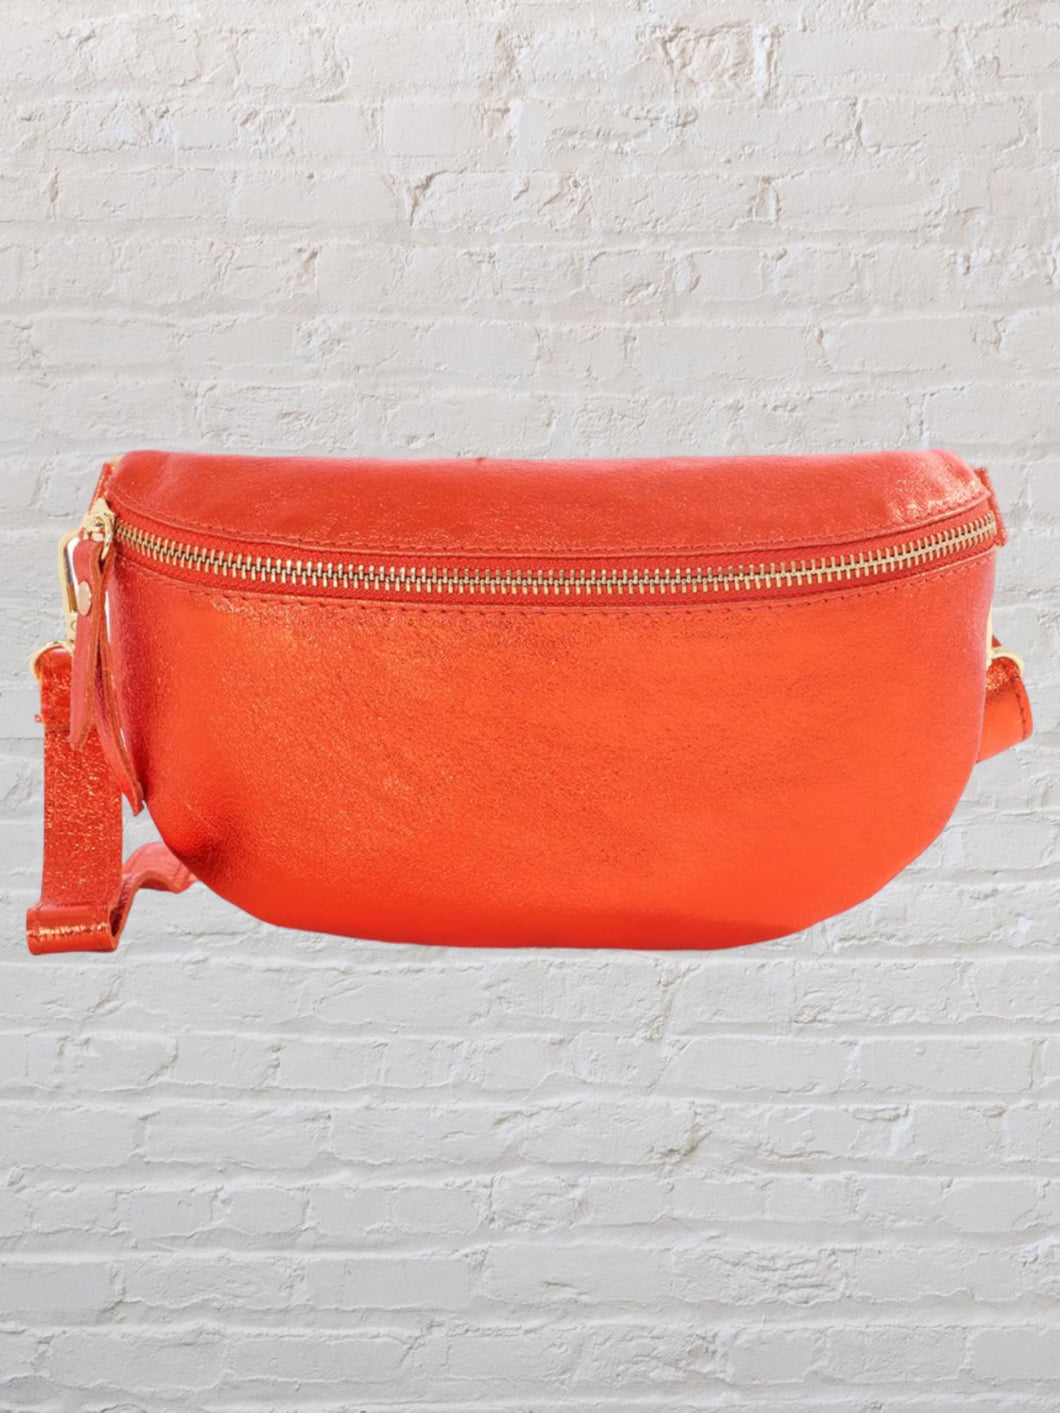 NEW Glorious metallic orange leather moon bag (small)